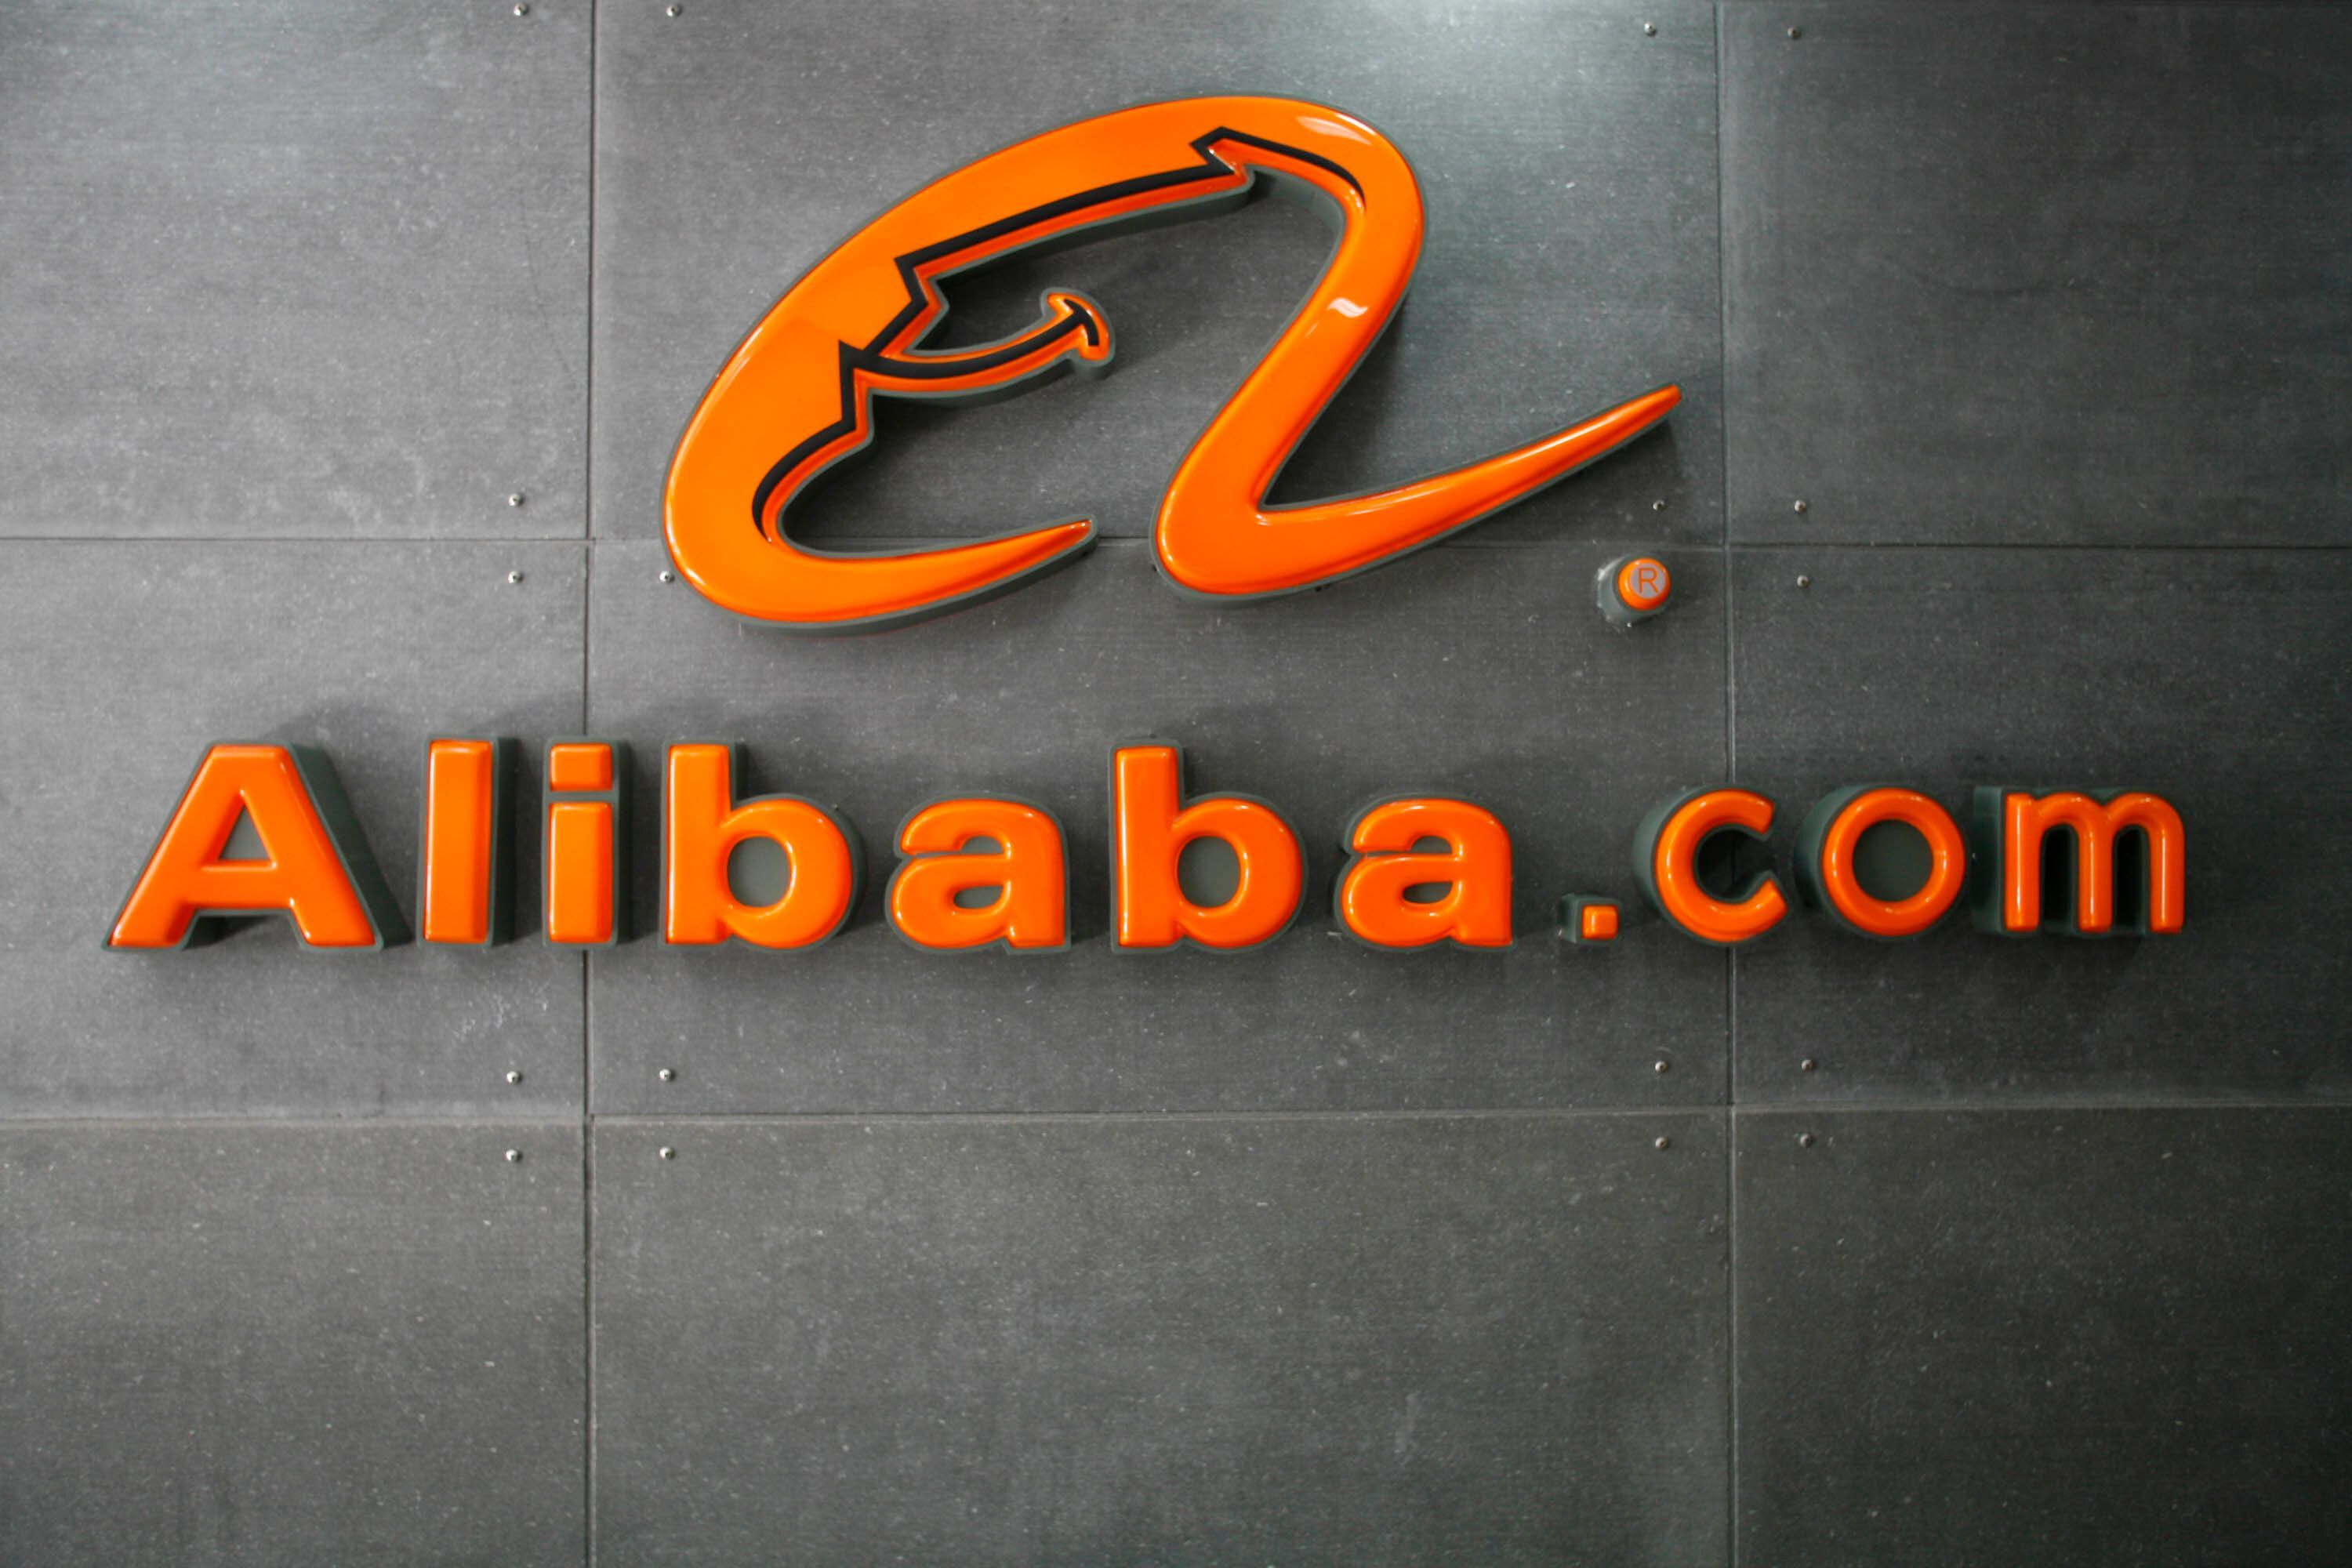  Alibaba.com -     